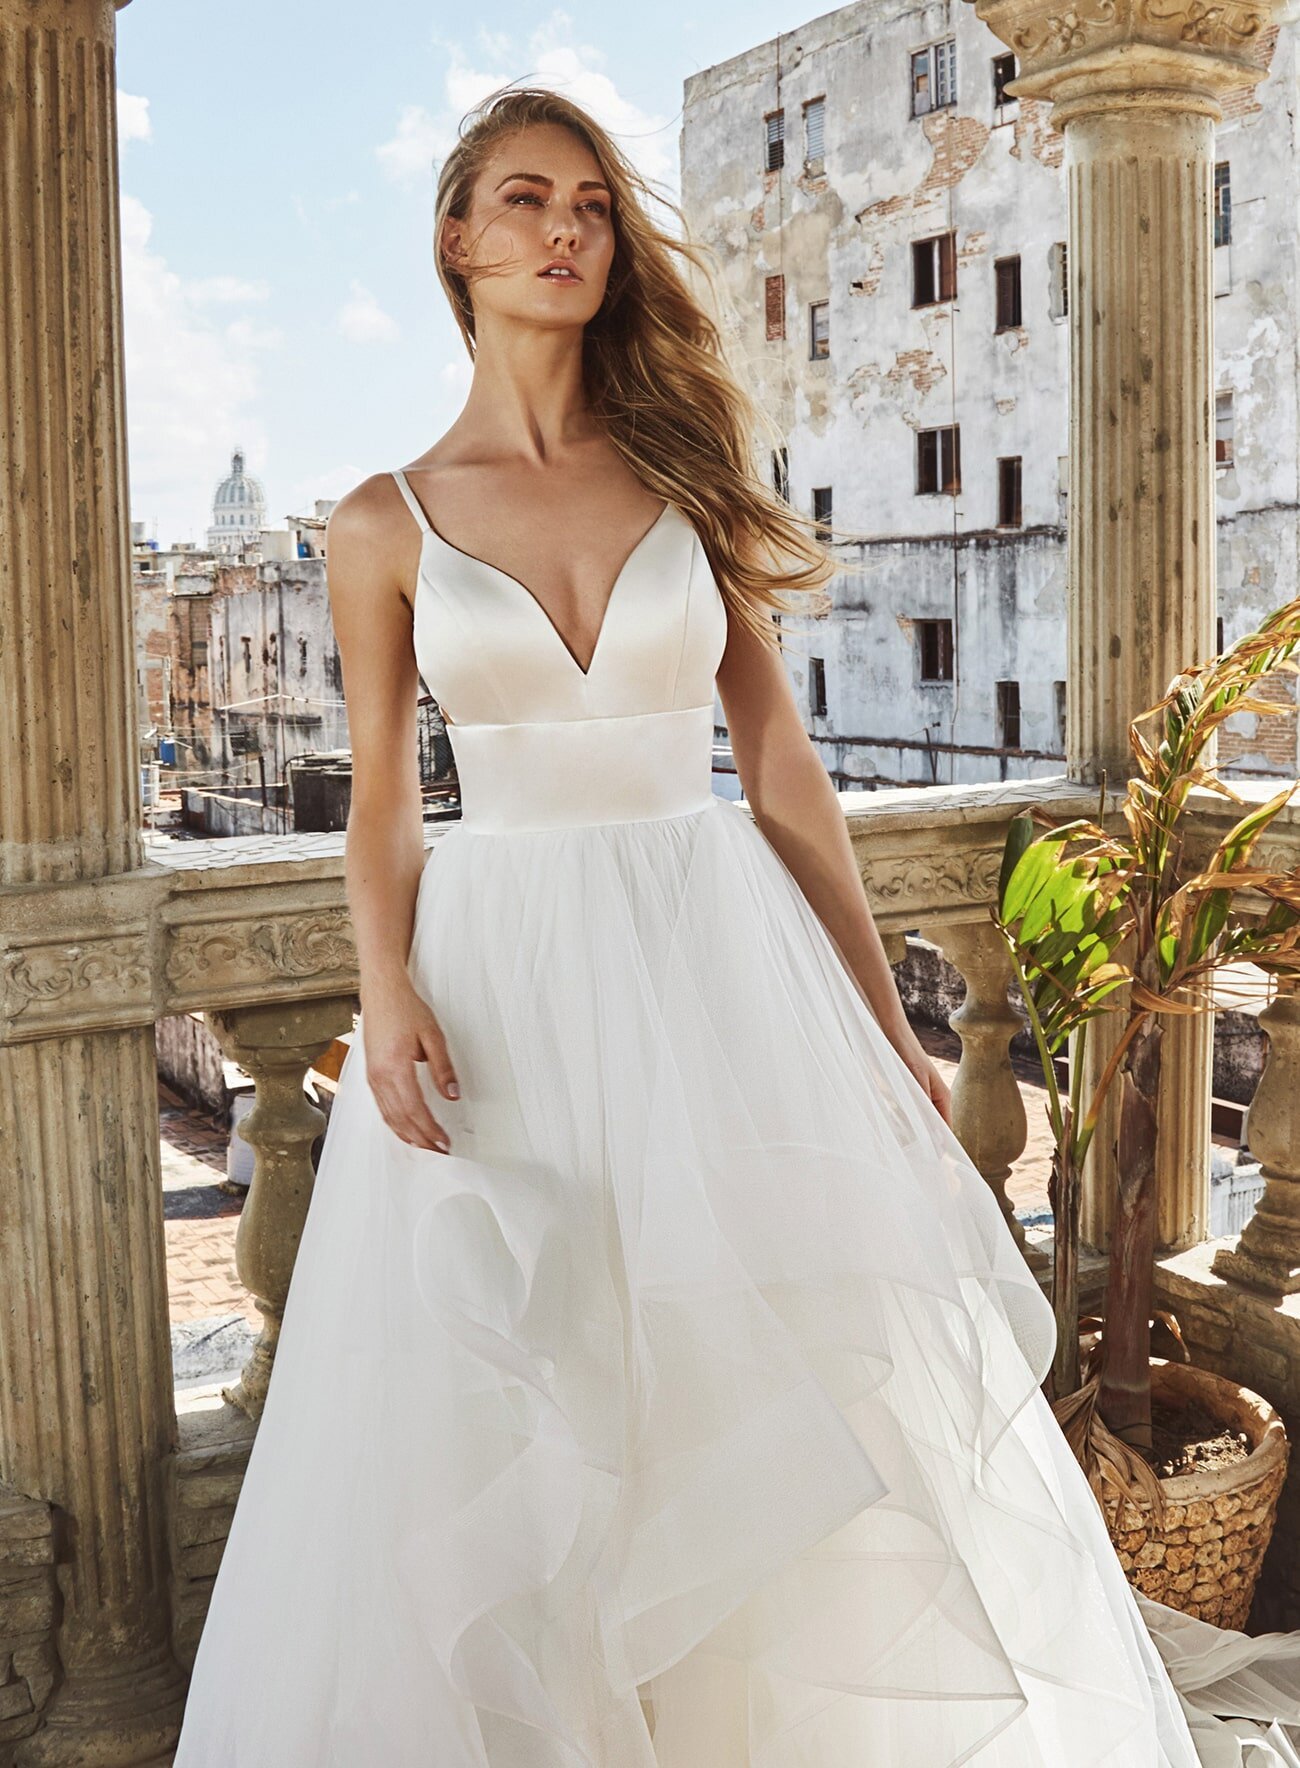 ivory-and-beau-wedding-dresses-bridal-shop-bridal-boutique-bridal-gown-wedding-gown-bride-bridal-shopping-bridal-appointment-tatum-lamour-calla-blanche-LA8223-2.jpg